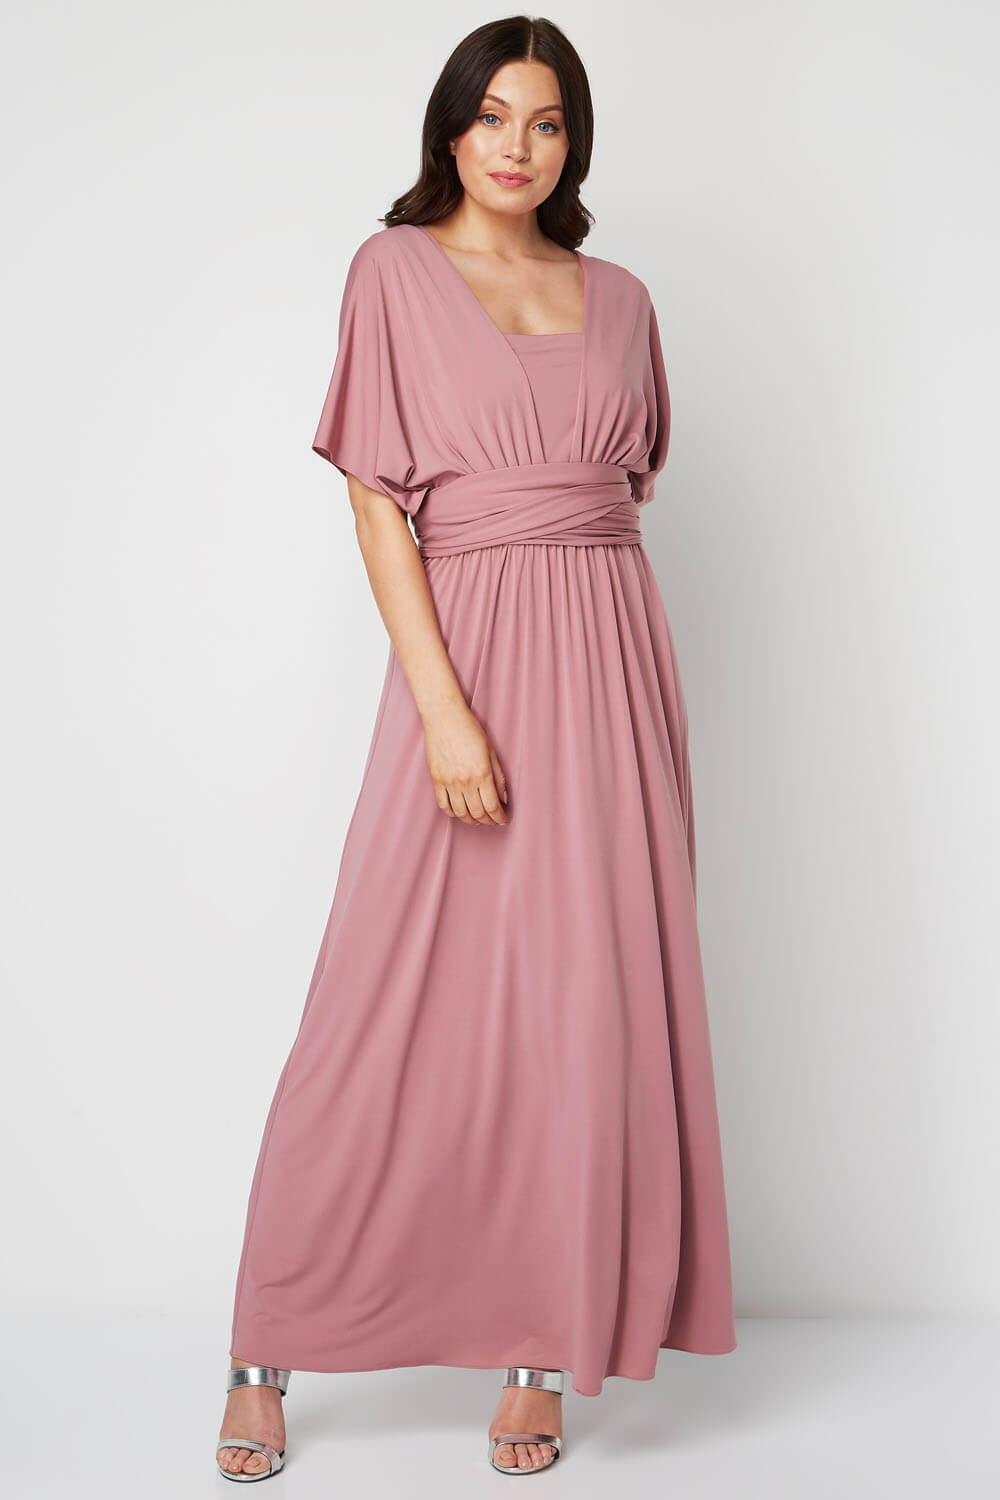 Multiway Maxi Dress in Rose - Roman Originals UK